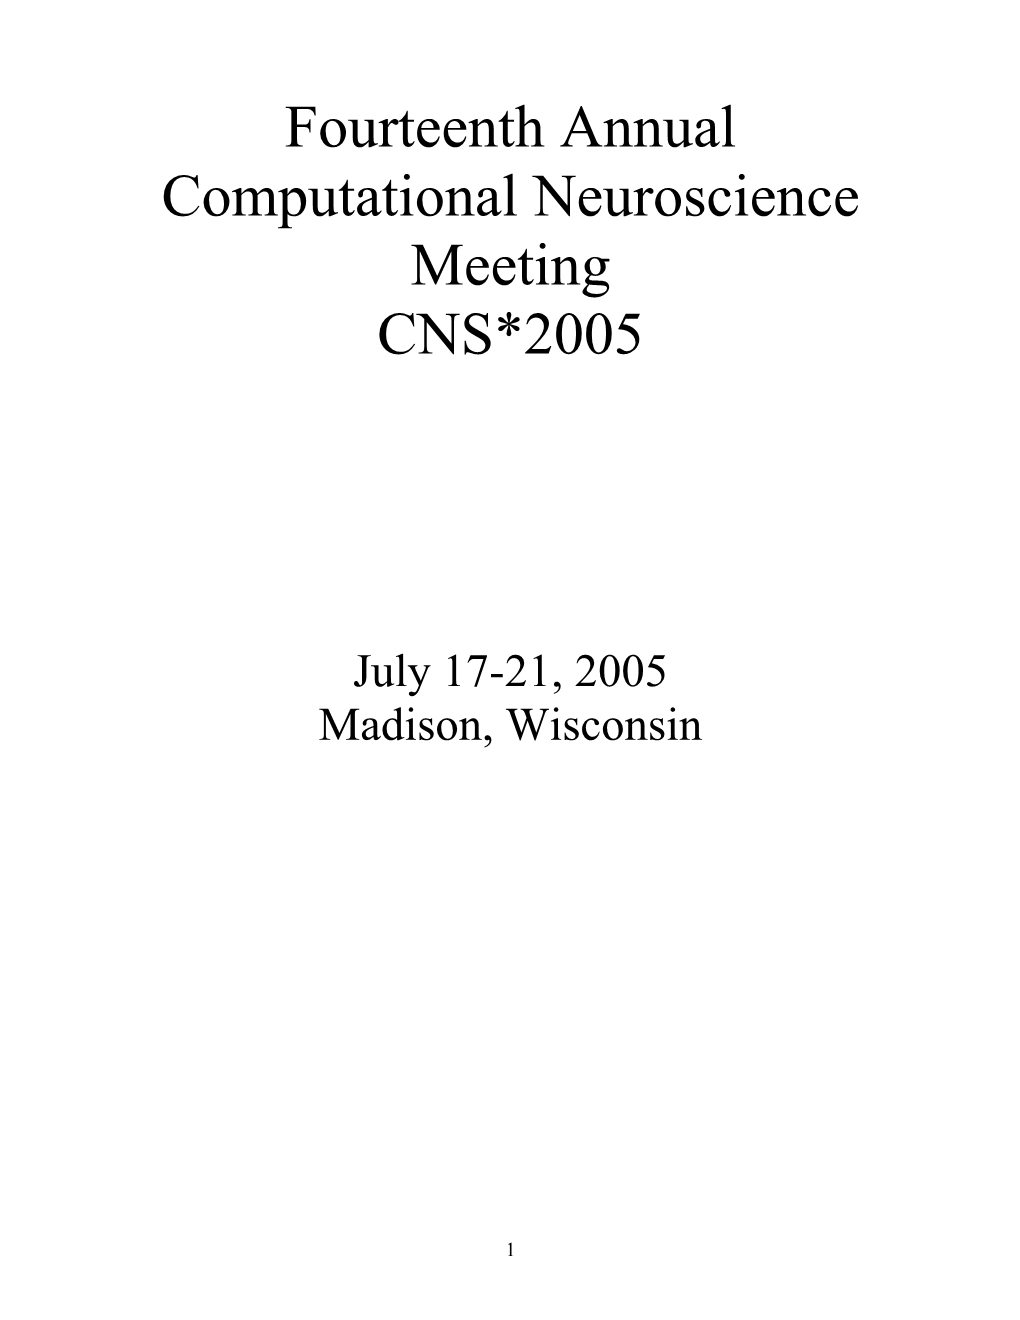 Fourteenth Annual Computational Neuroscience Meeting CNS*2005